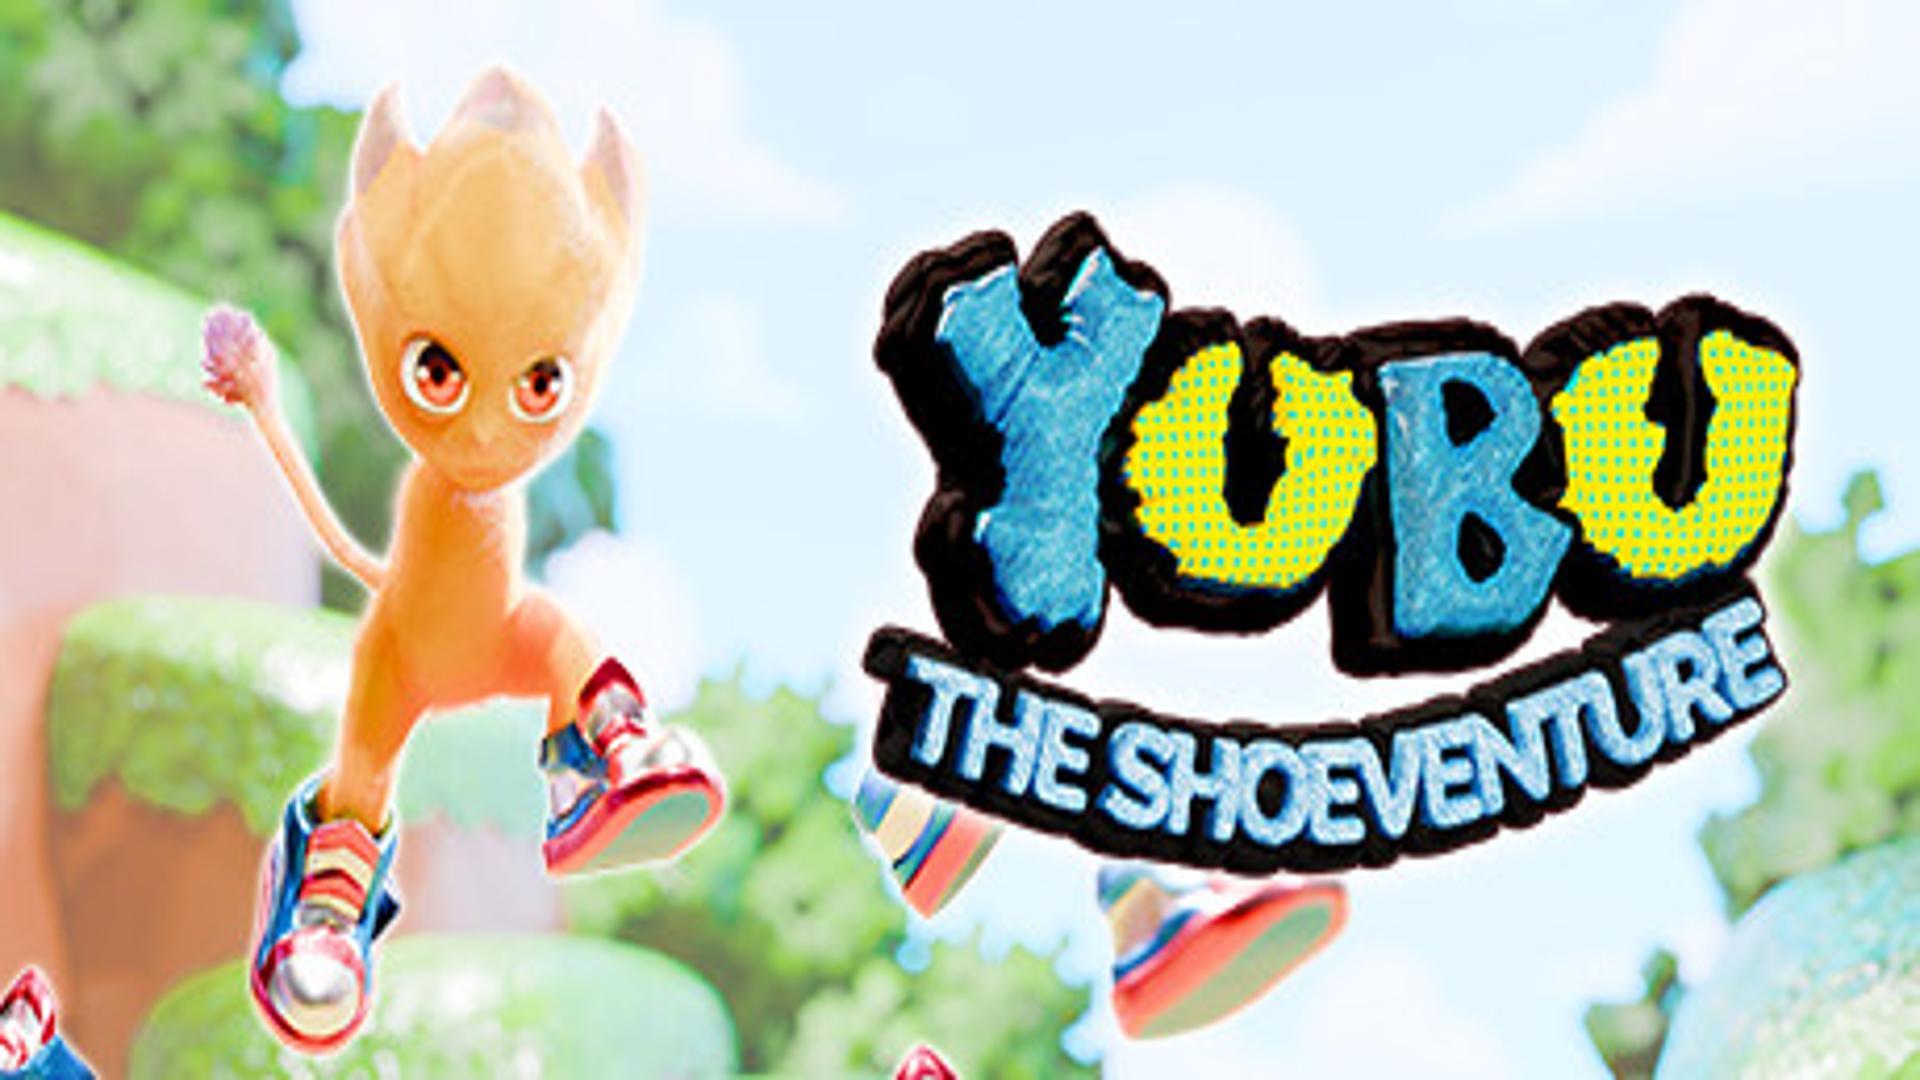 Yubu: The Shoeventure- Free Download (V.1.1.0)